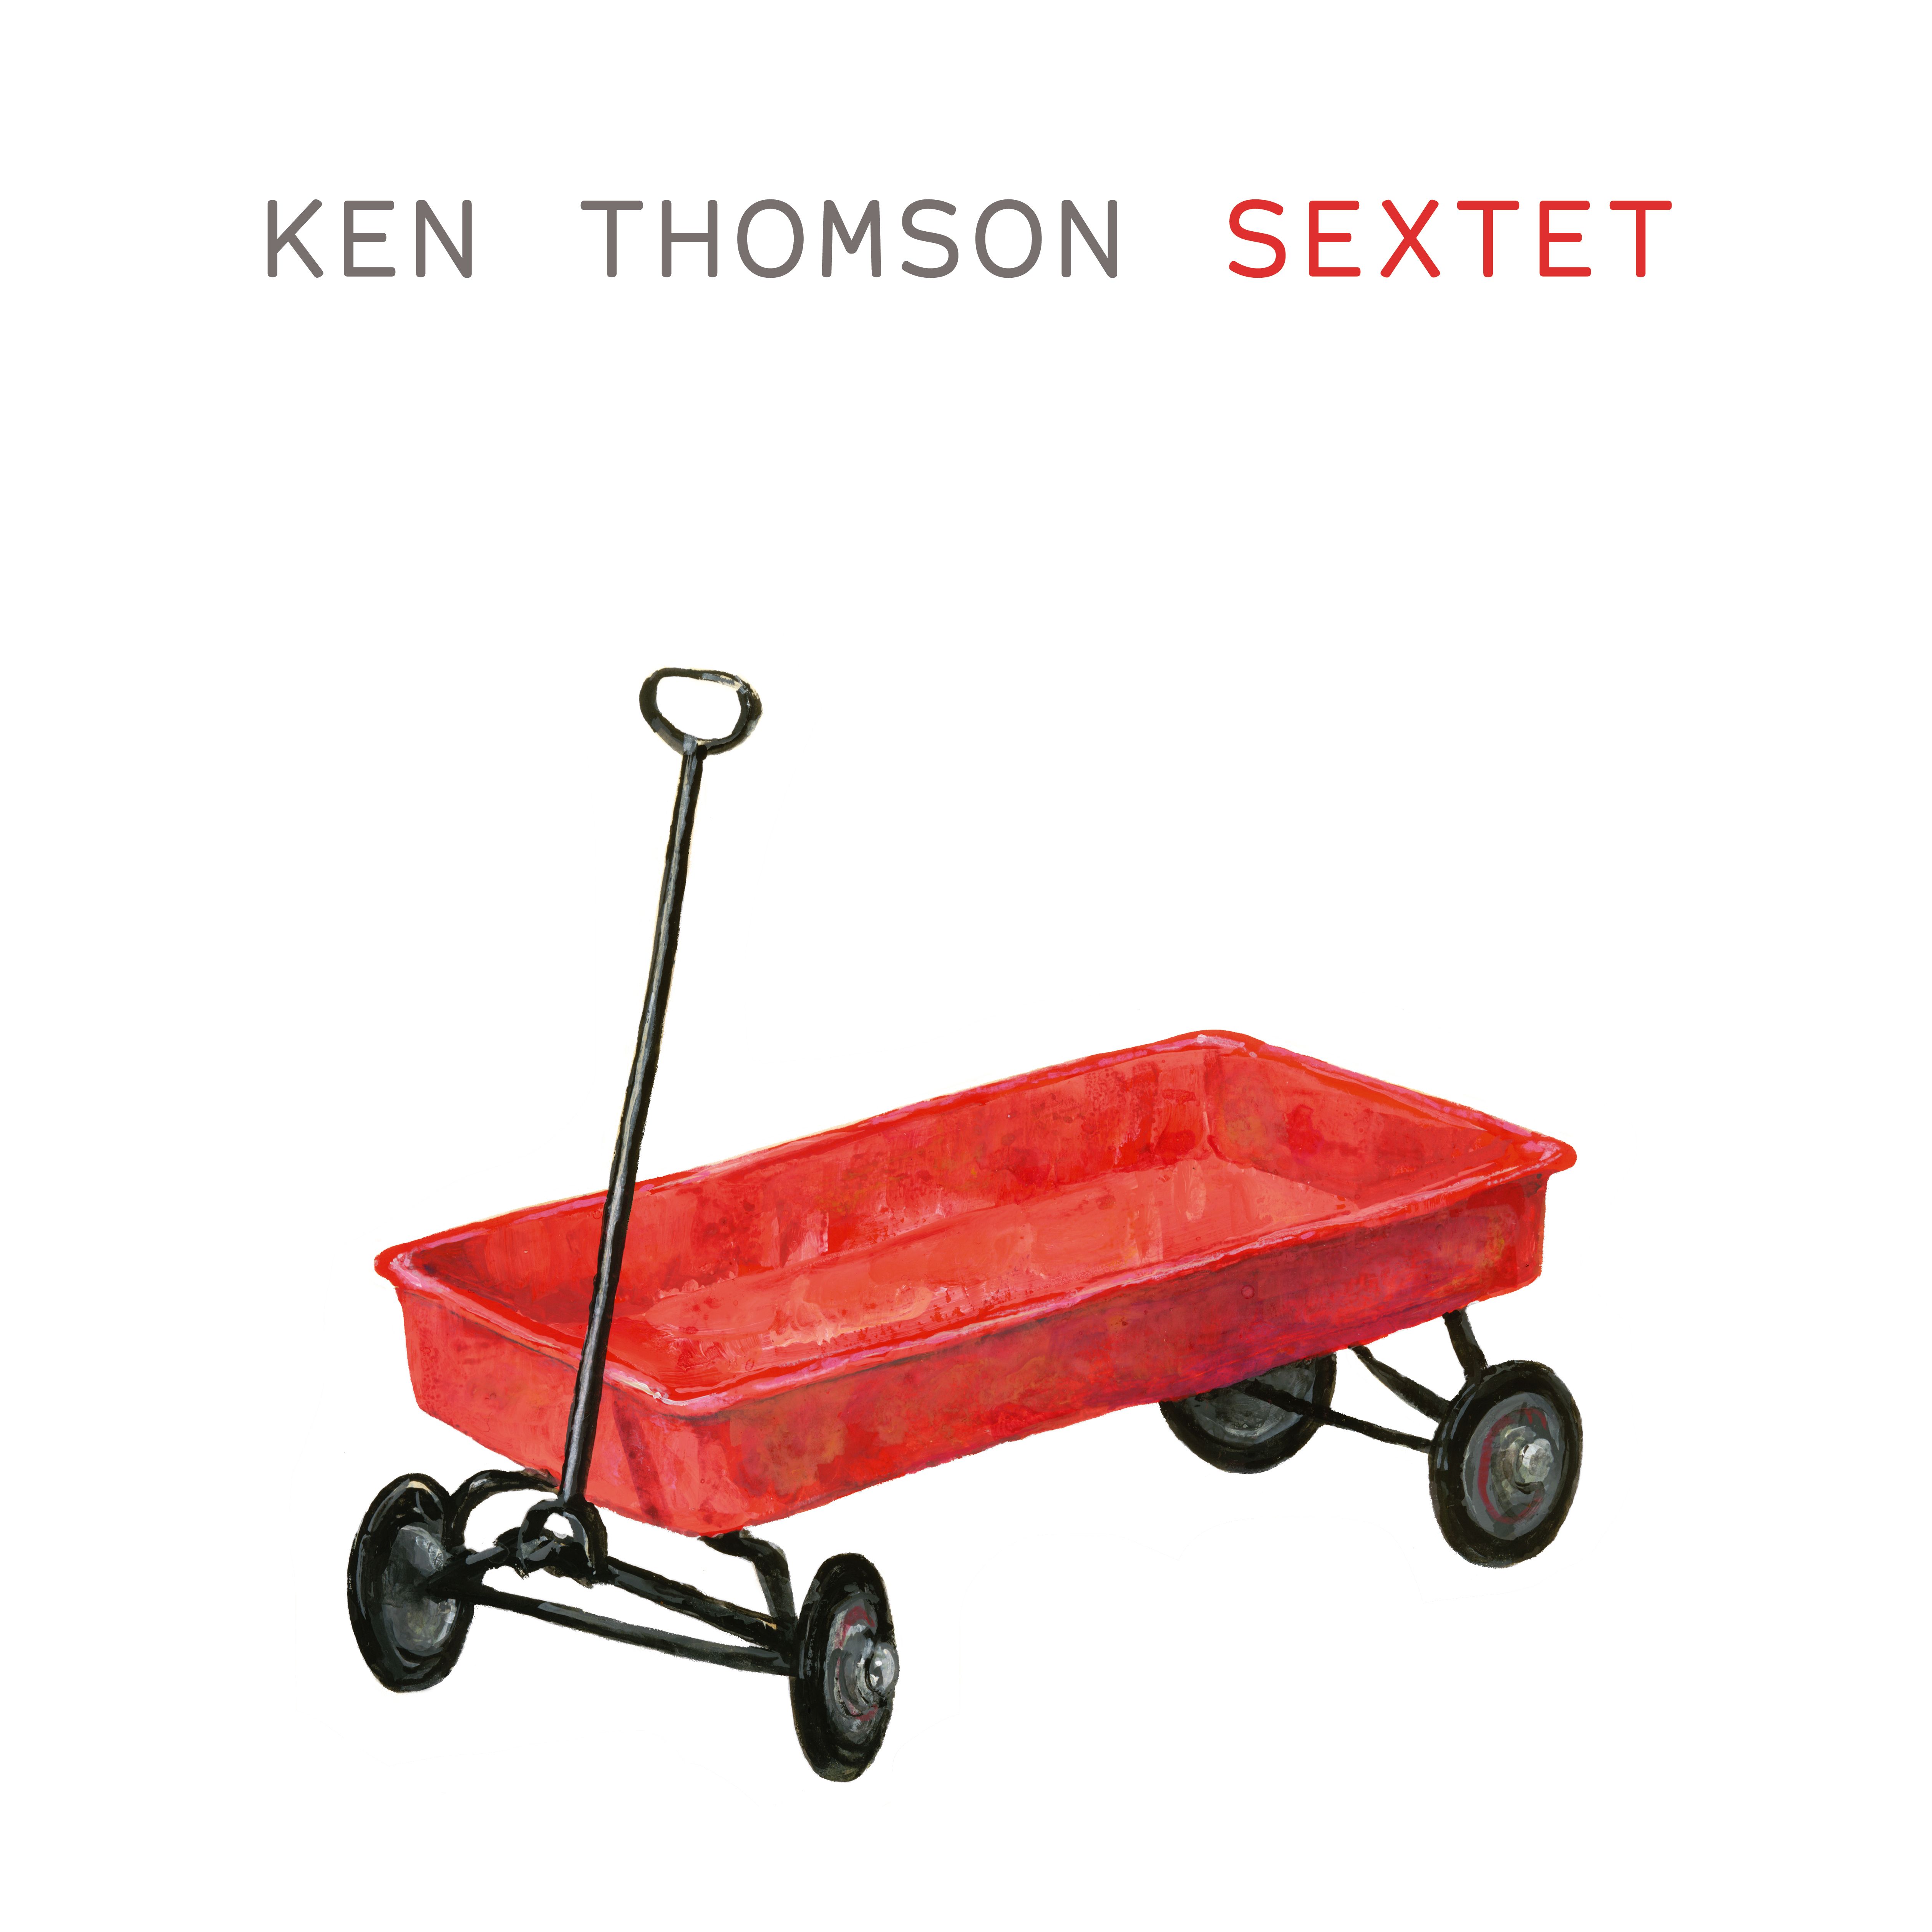 Thomson, Ken - Sextet